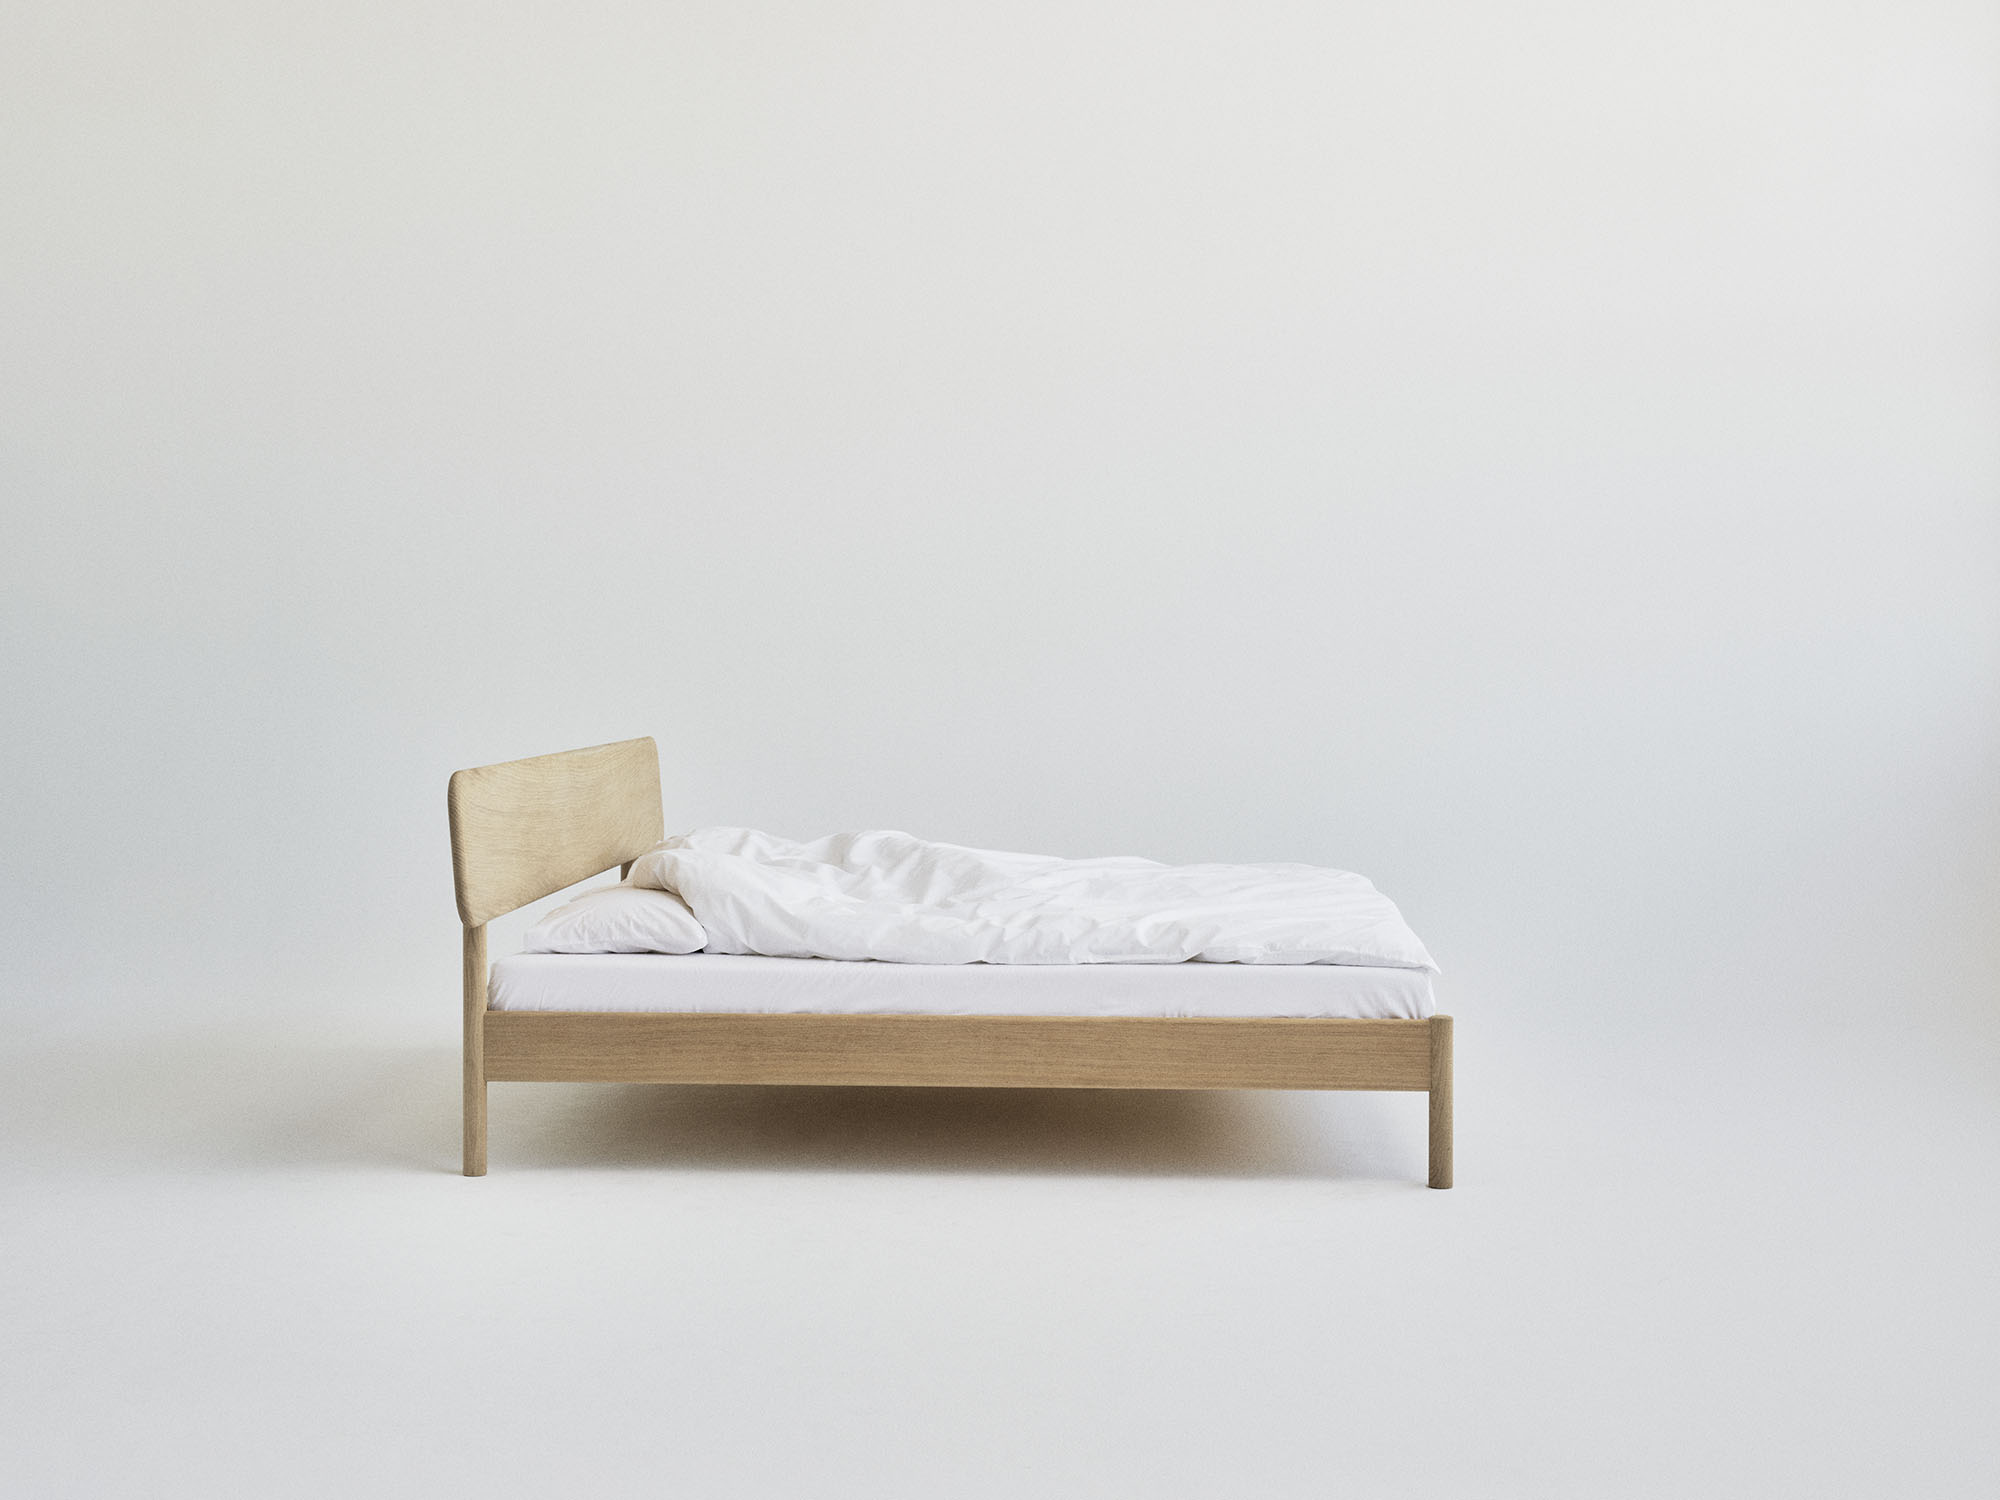 RYE Alken bed frame in soaped solid oak - side view pack shot